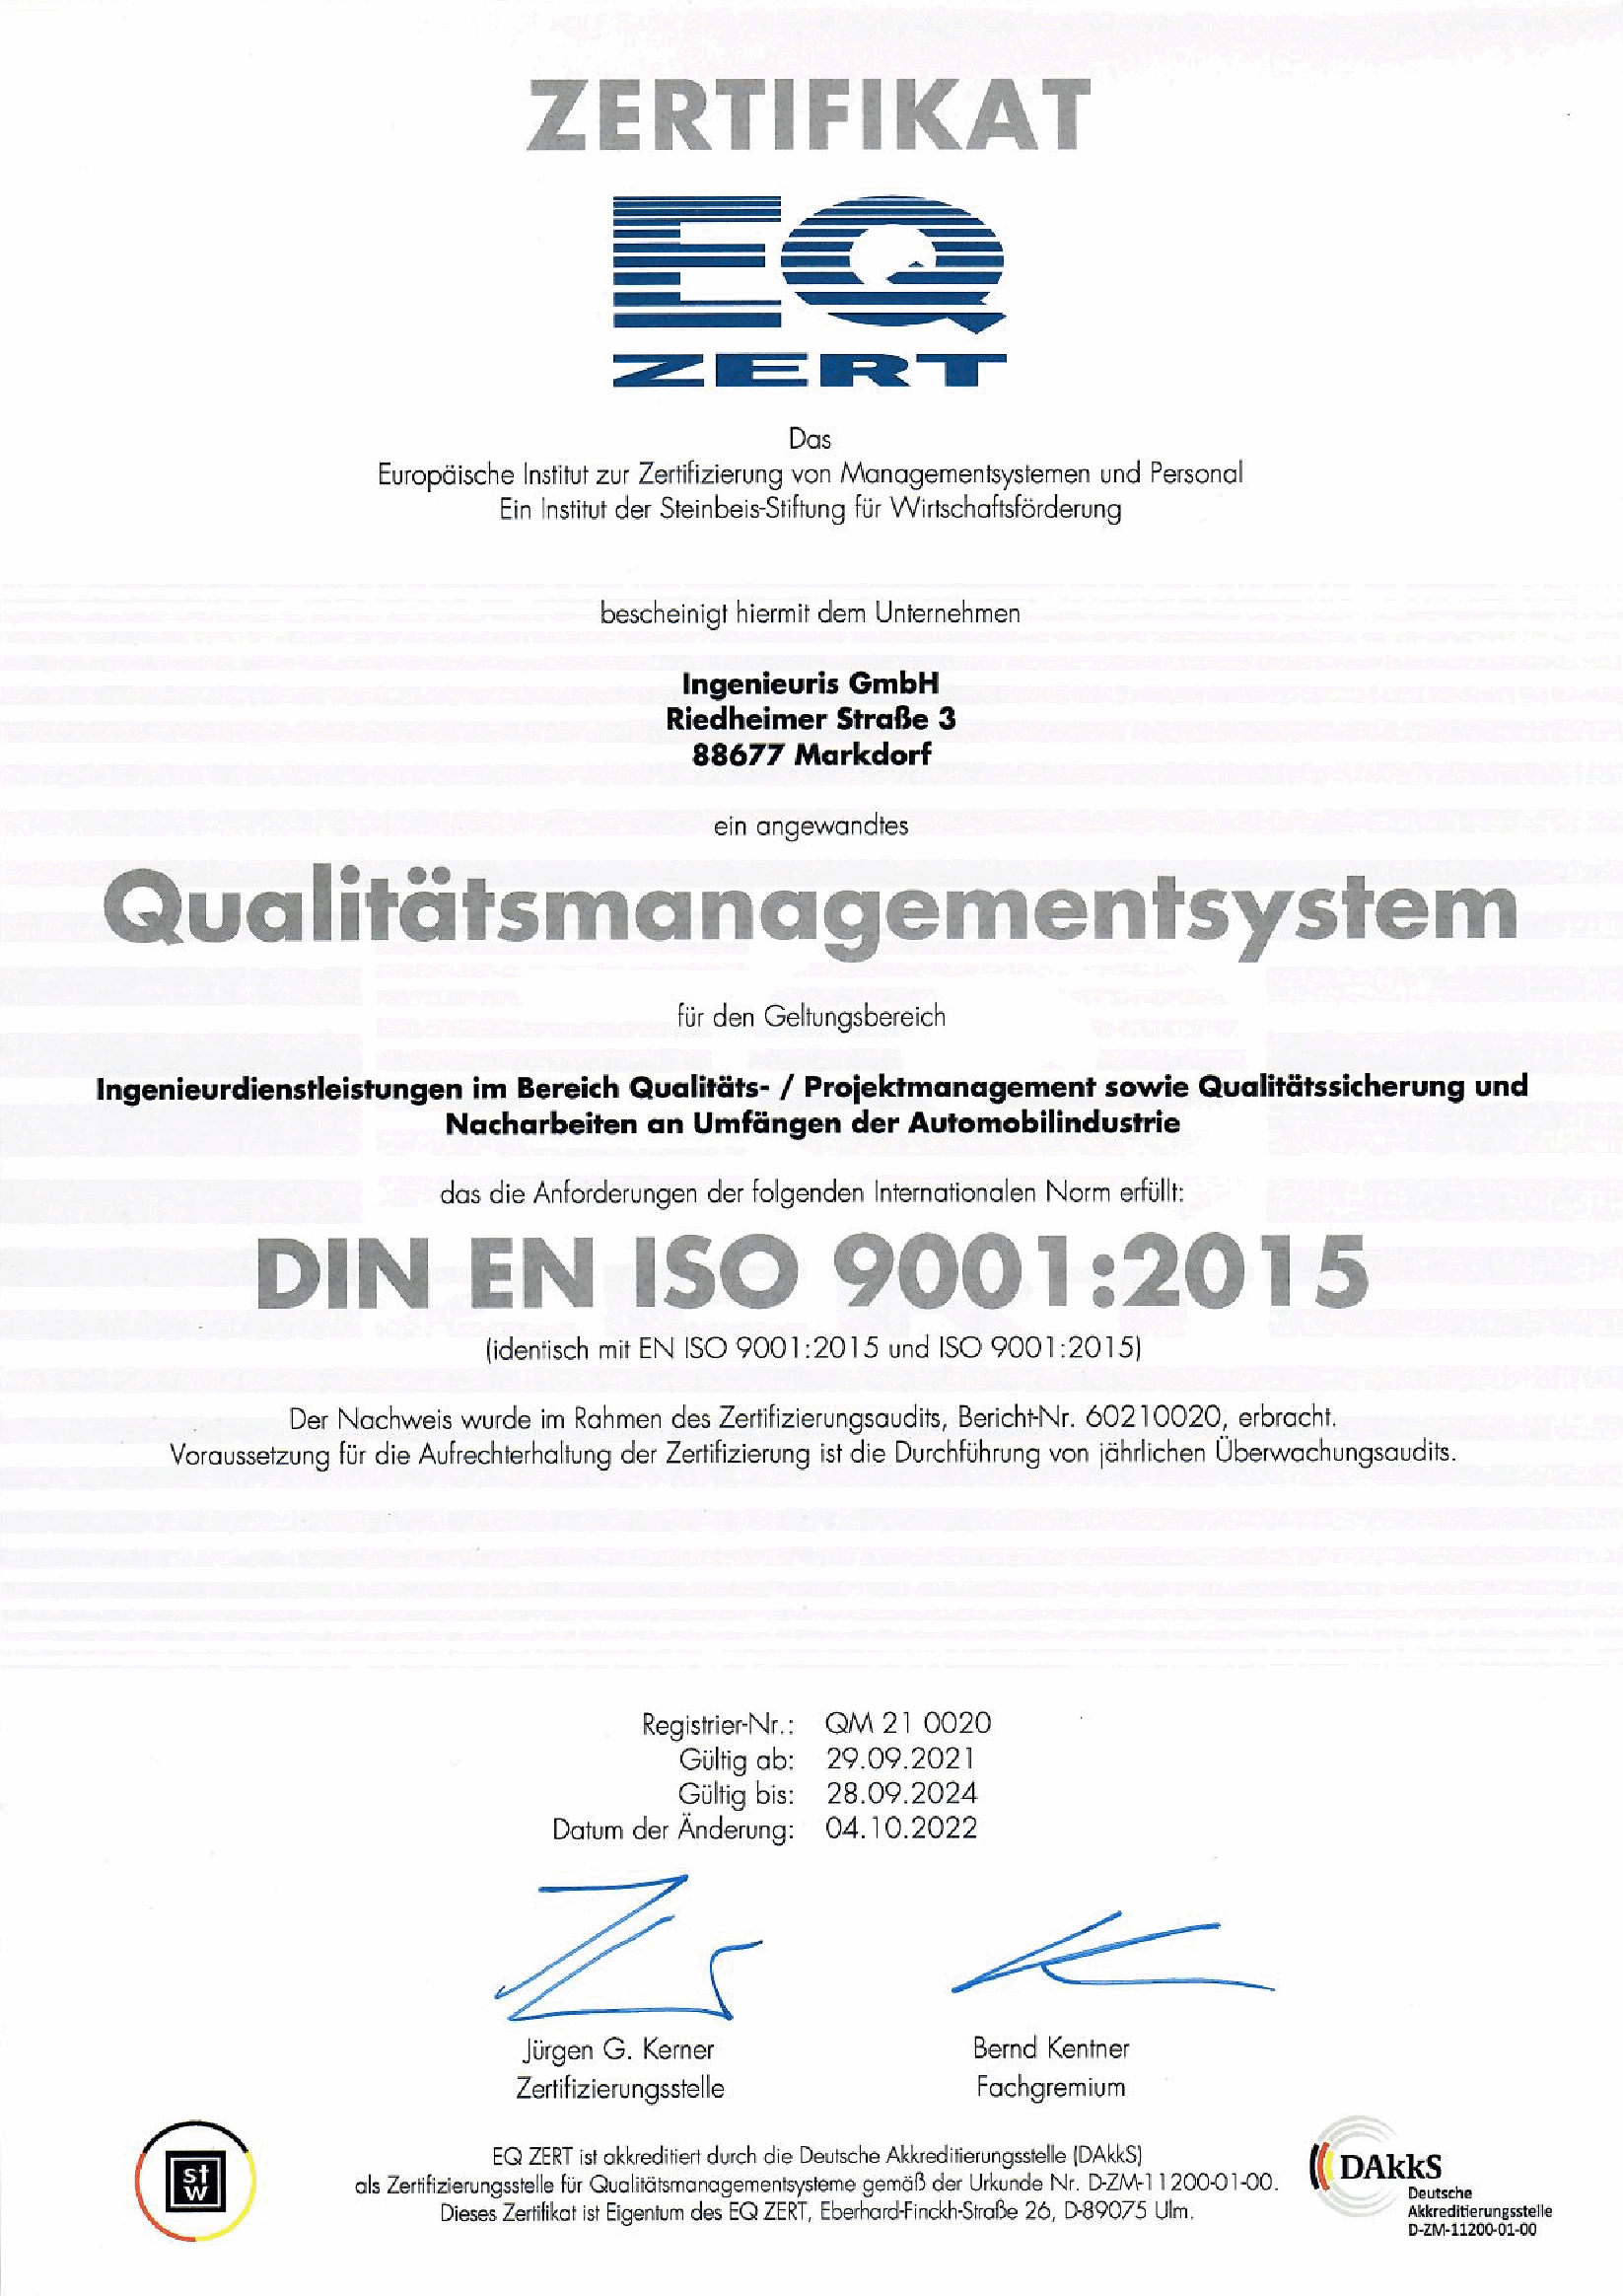 Ingenieuris GmbH Zertifikat